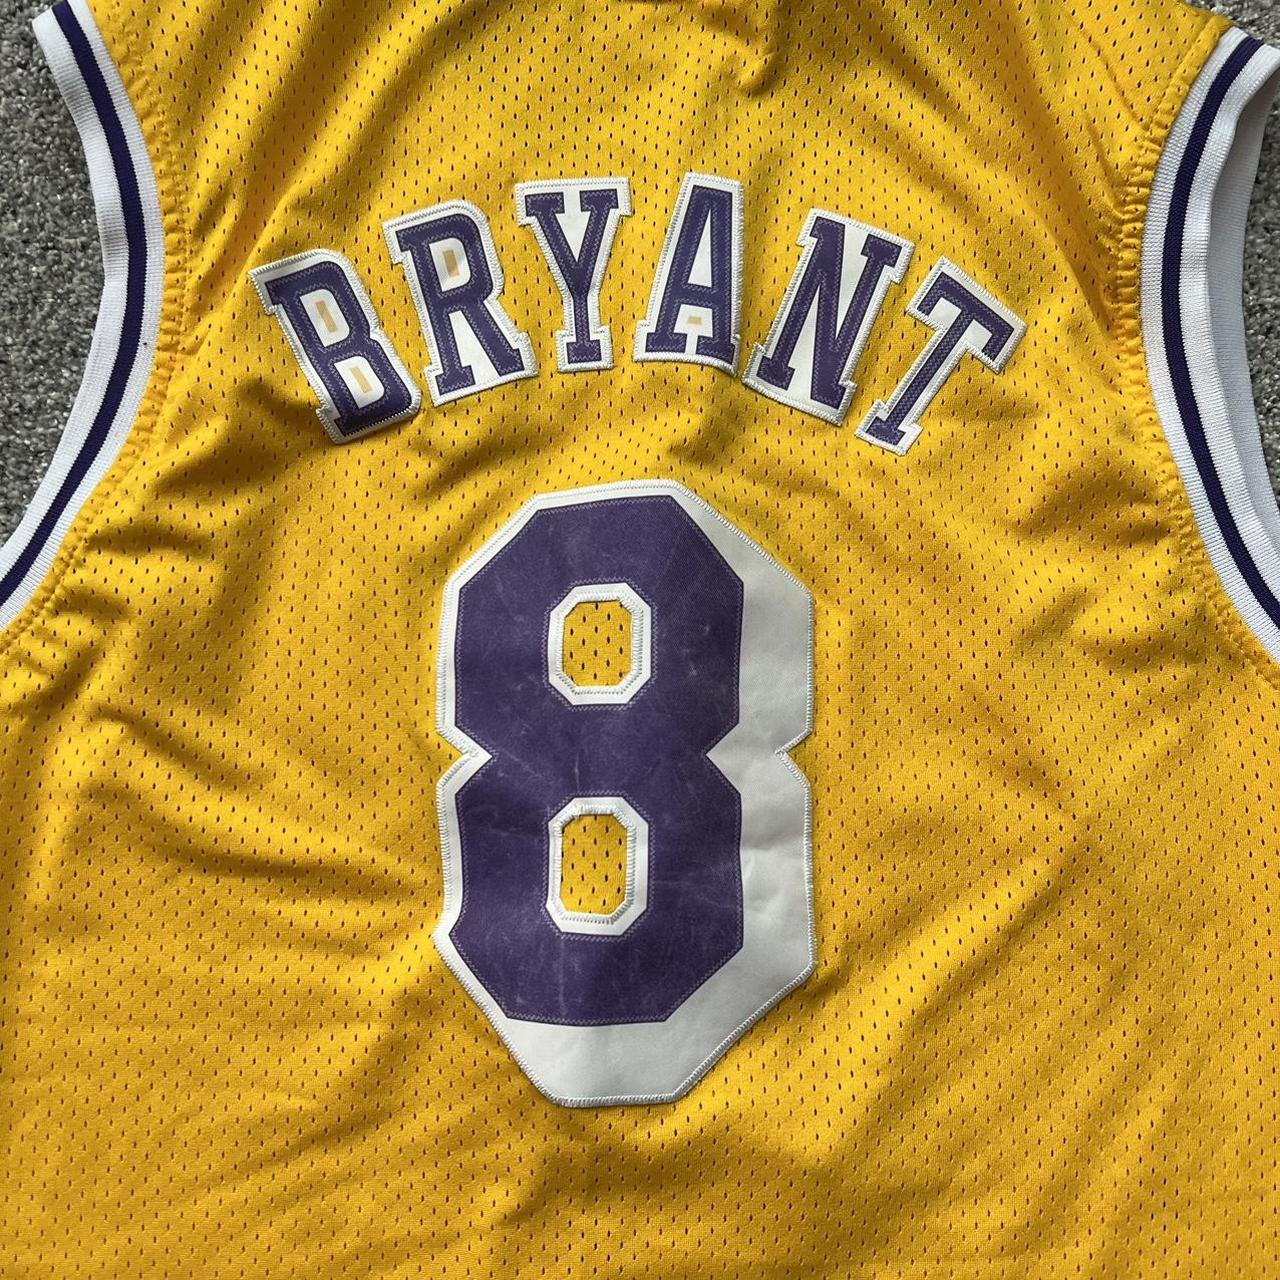 LA Lakers Kobe Bryant vest, adidas hardwood classic, - Depop